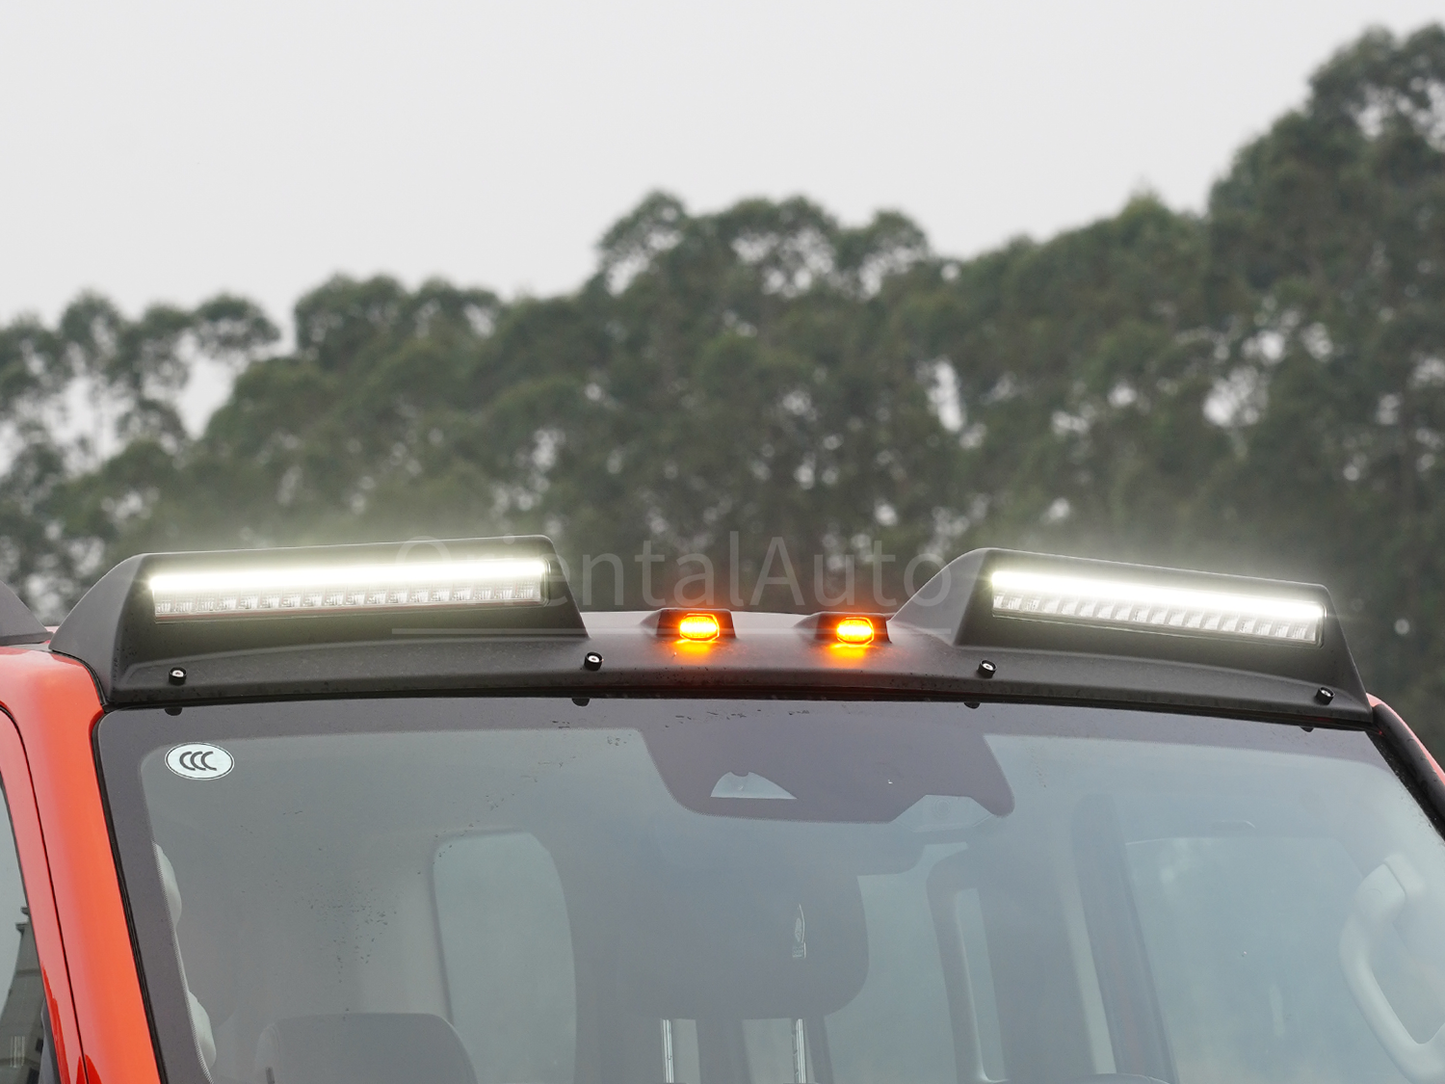 OAD Roof Spotlight Searchlight Off-Road LED Lamp for GWM TANK 300 TANK300